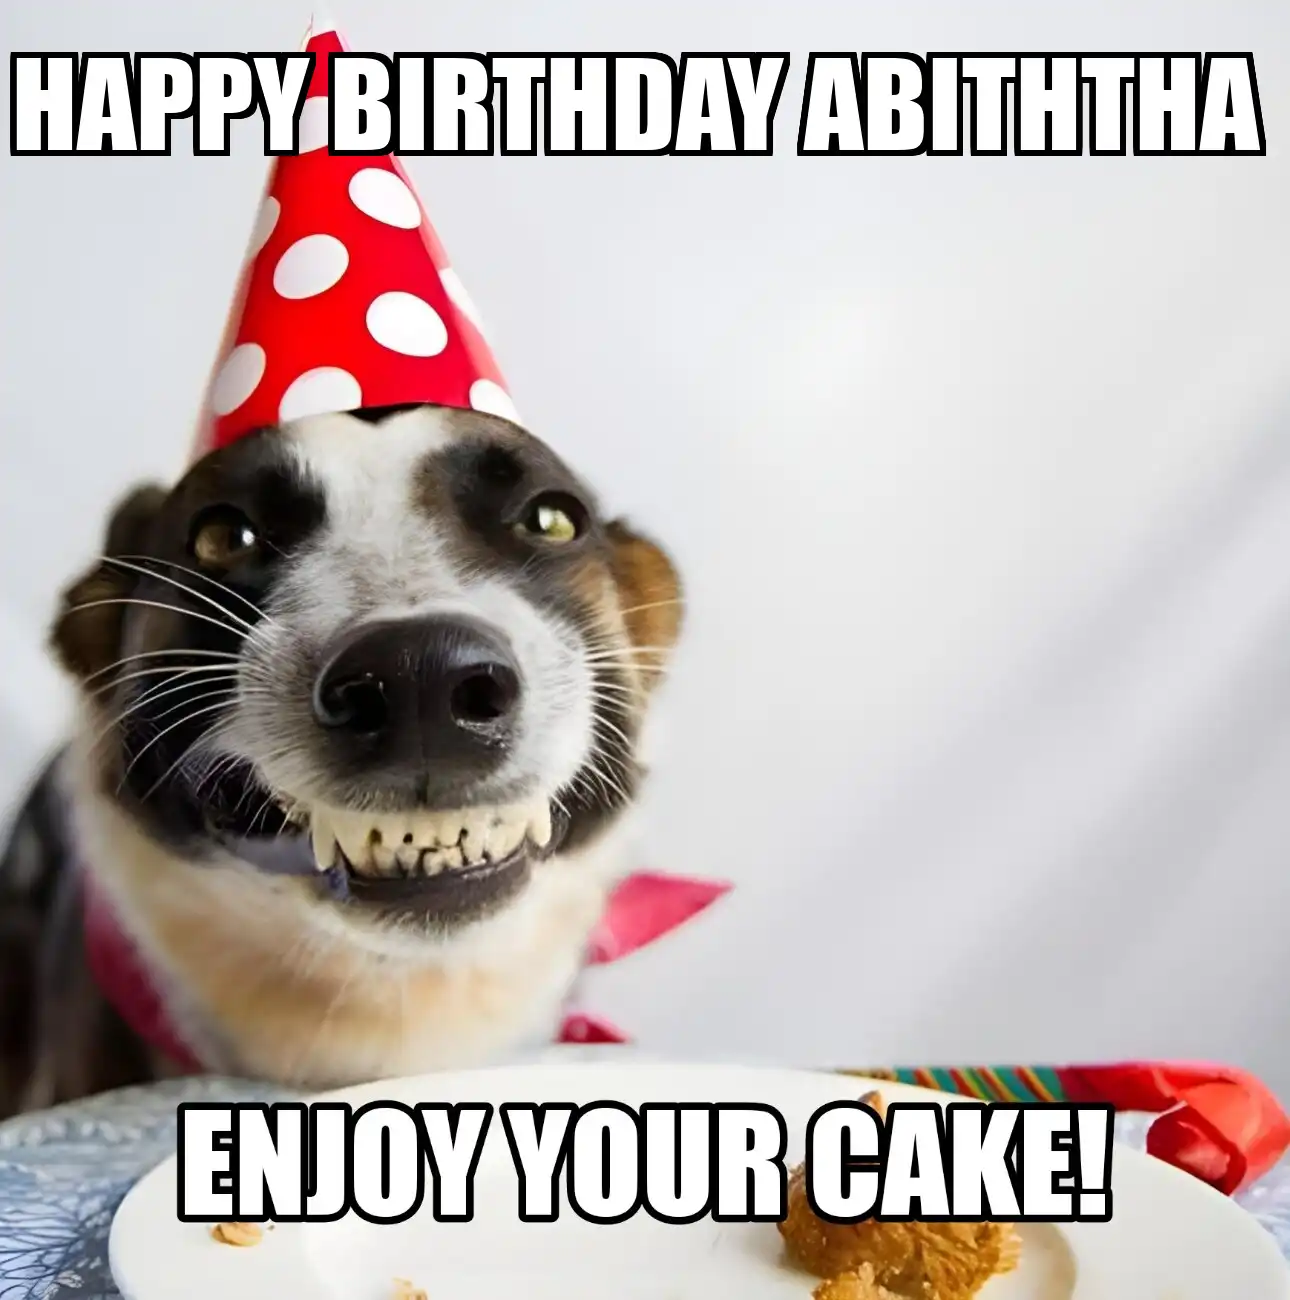 Happy Birthday Abiththa Enjoy Your Cake Dog Meme